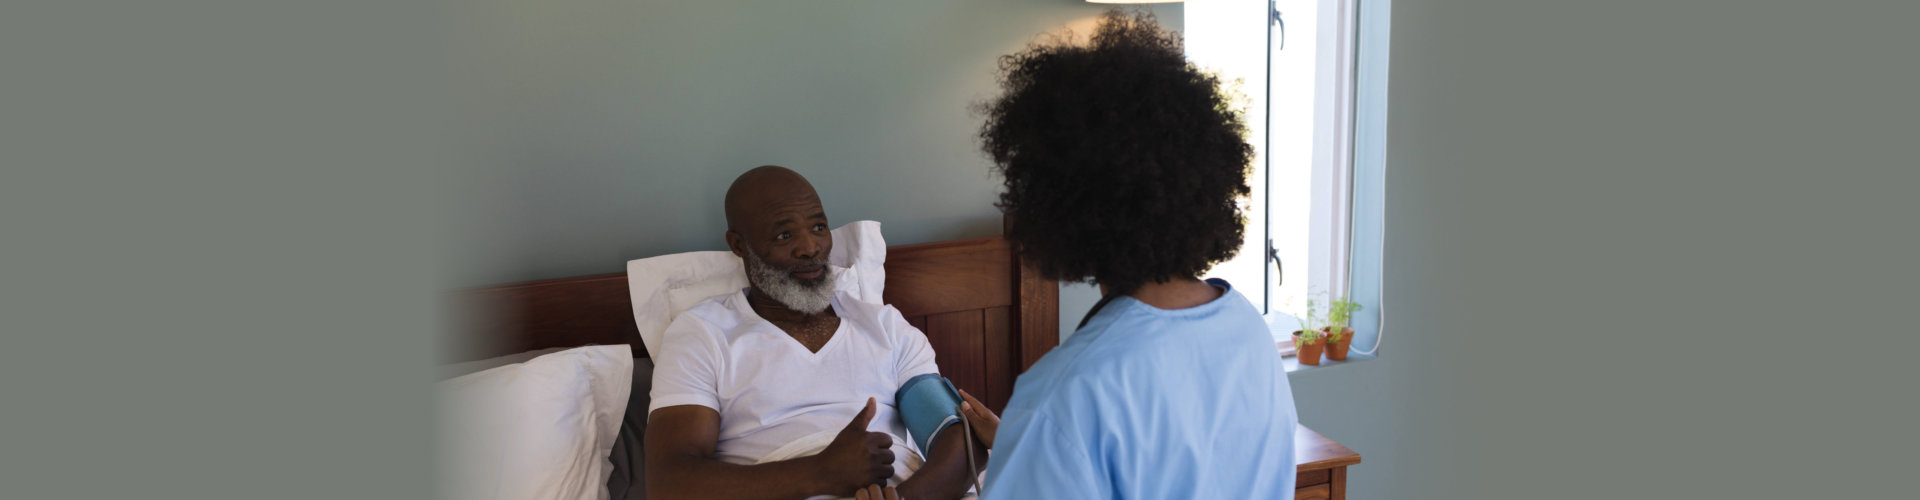 caregiver checking blood pressure of senior man